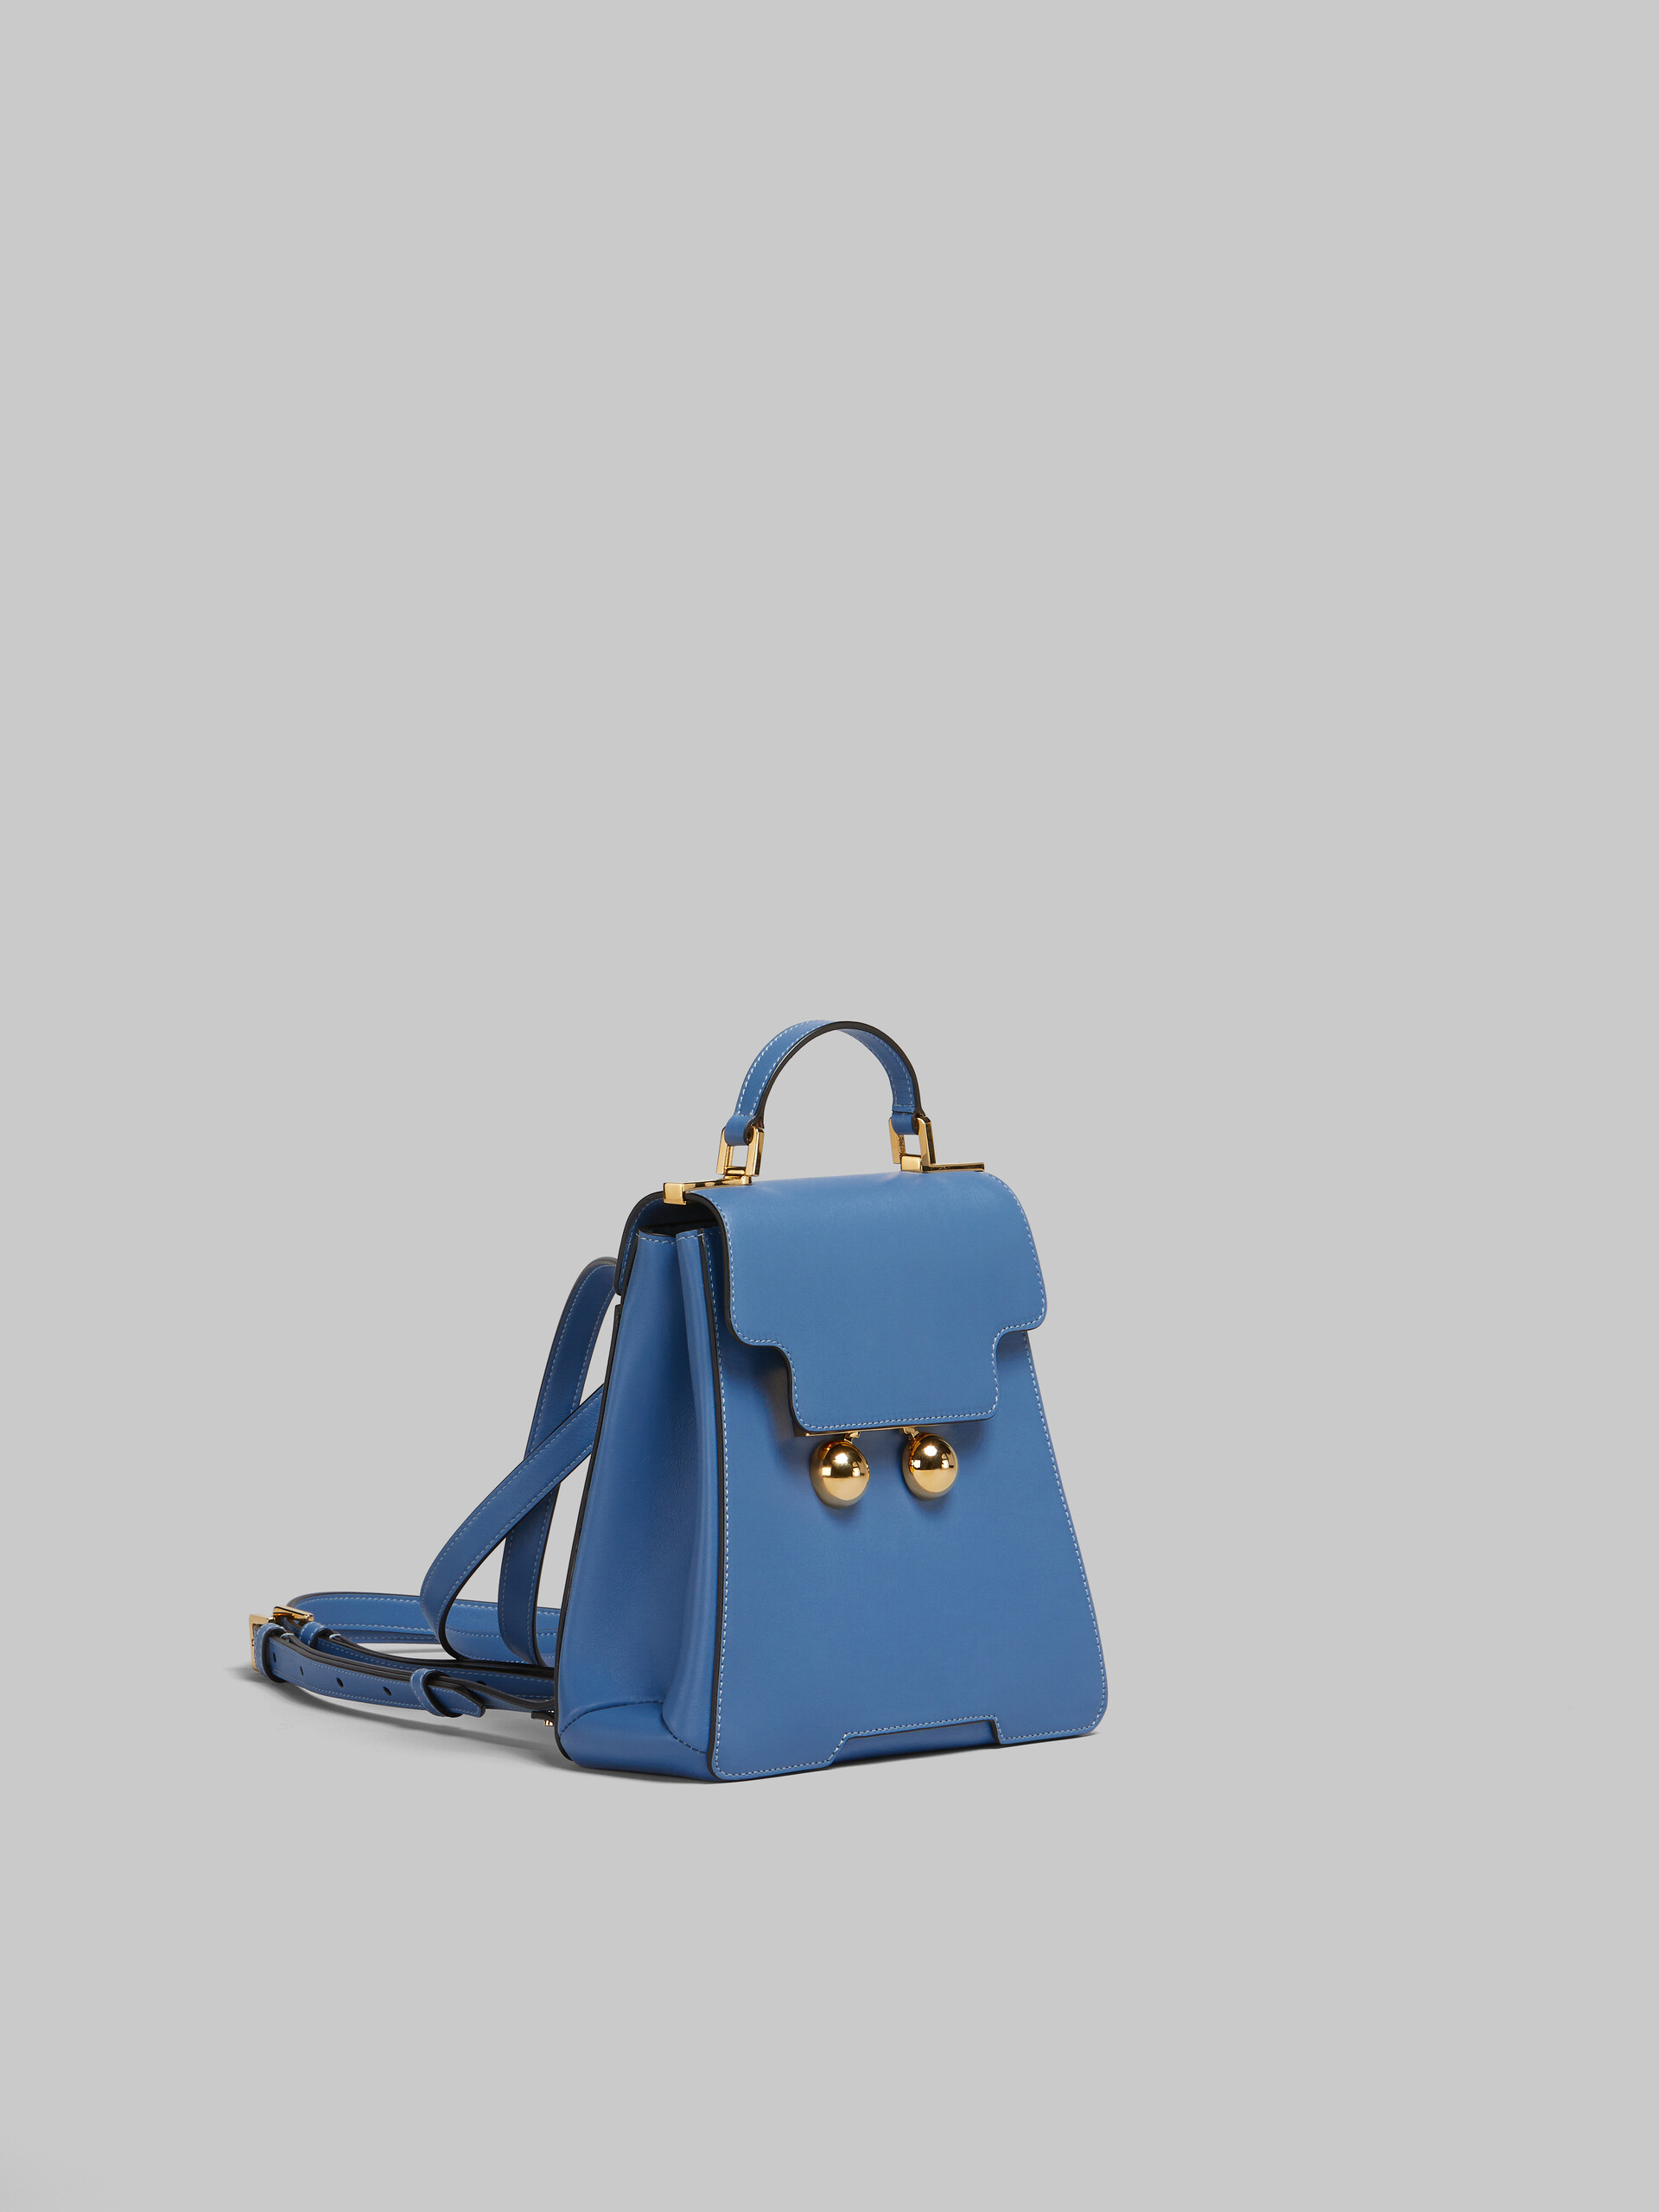 Blue leather Trunkaroo backpack - Backpack - Image 6